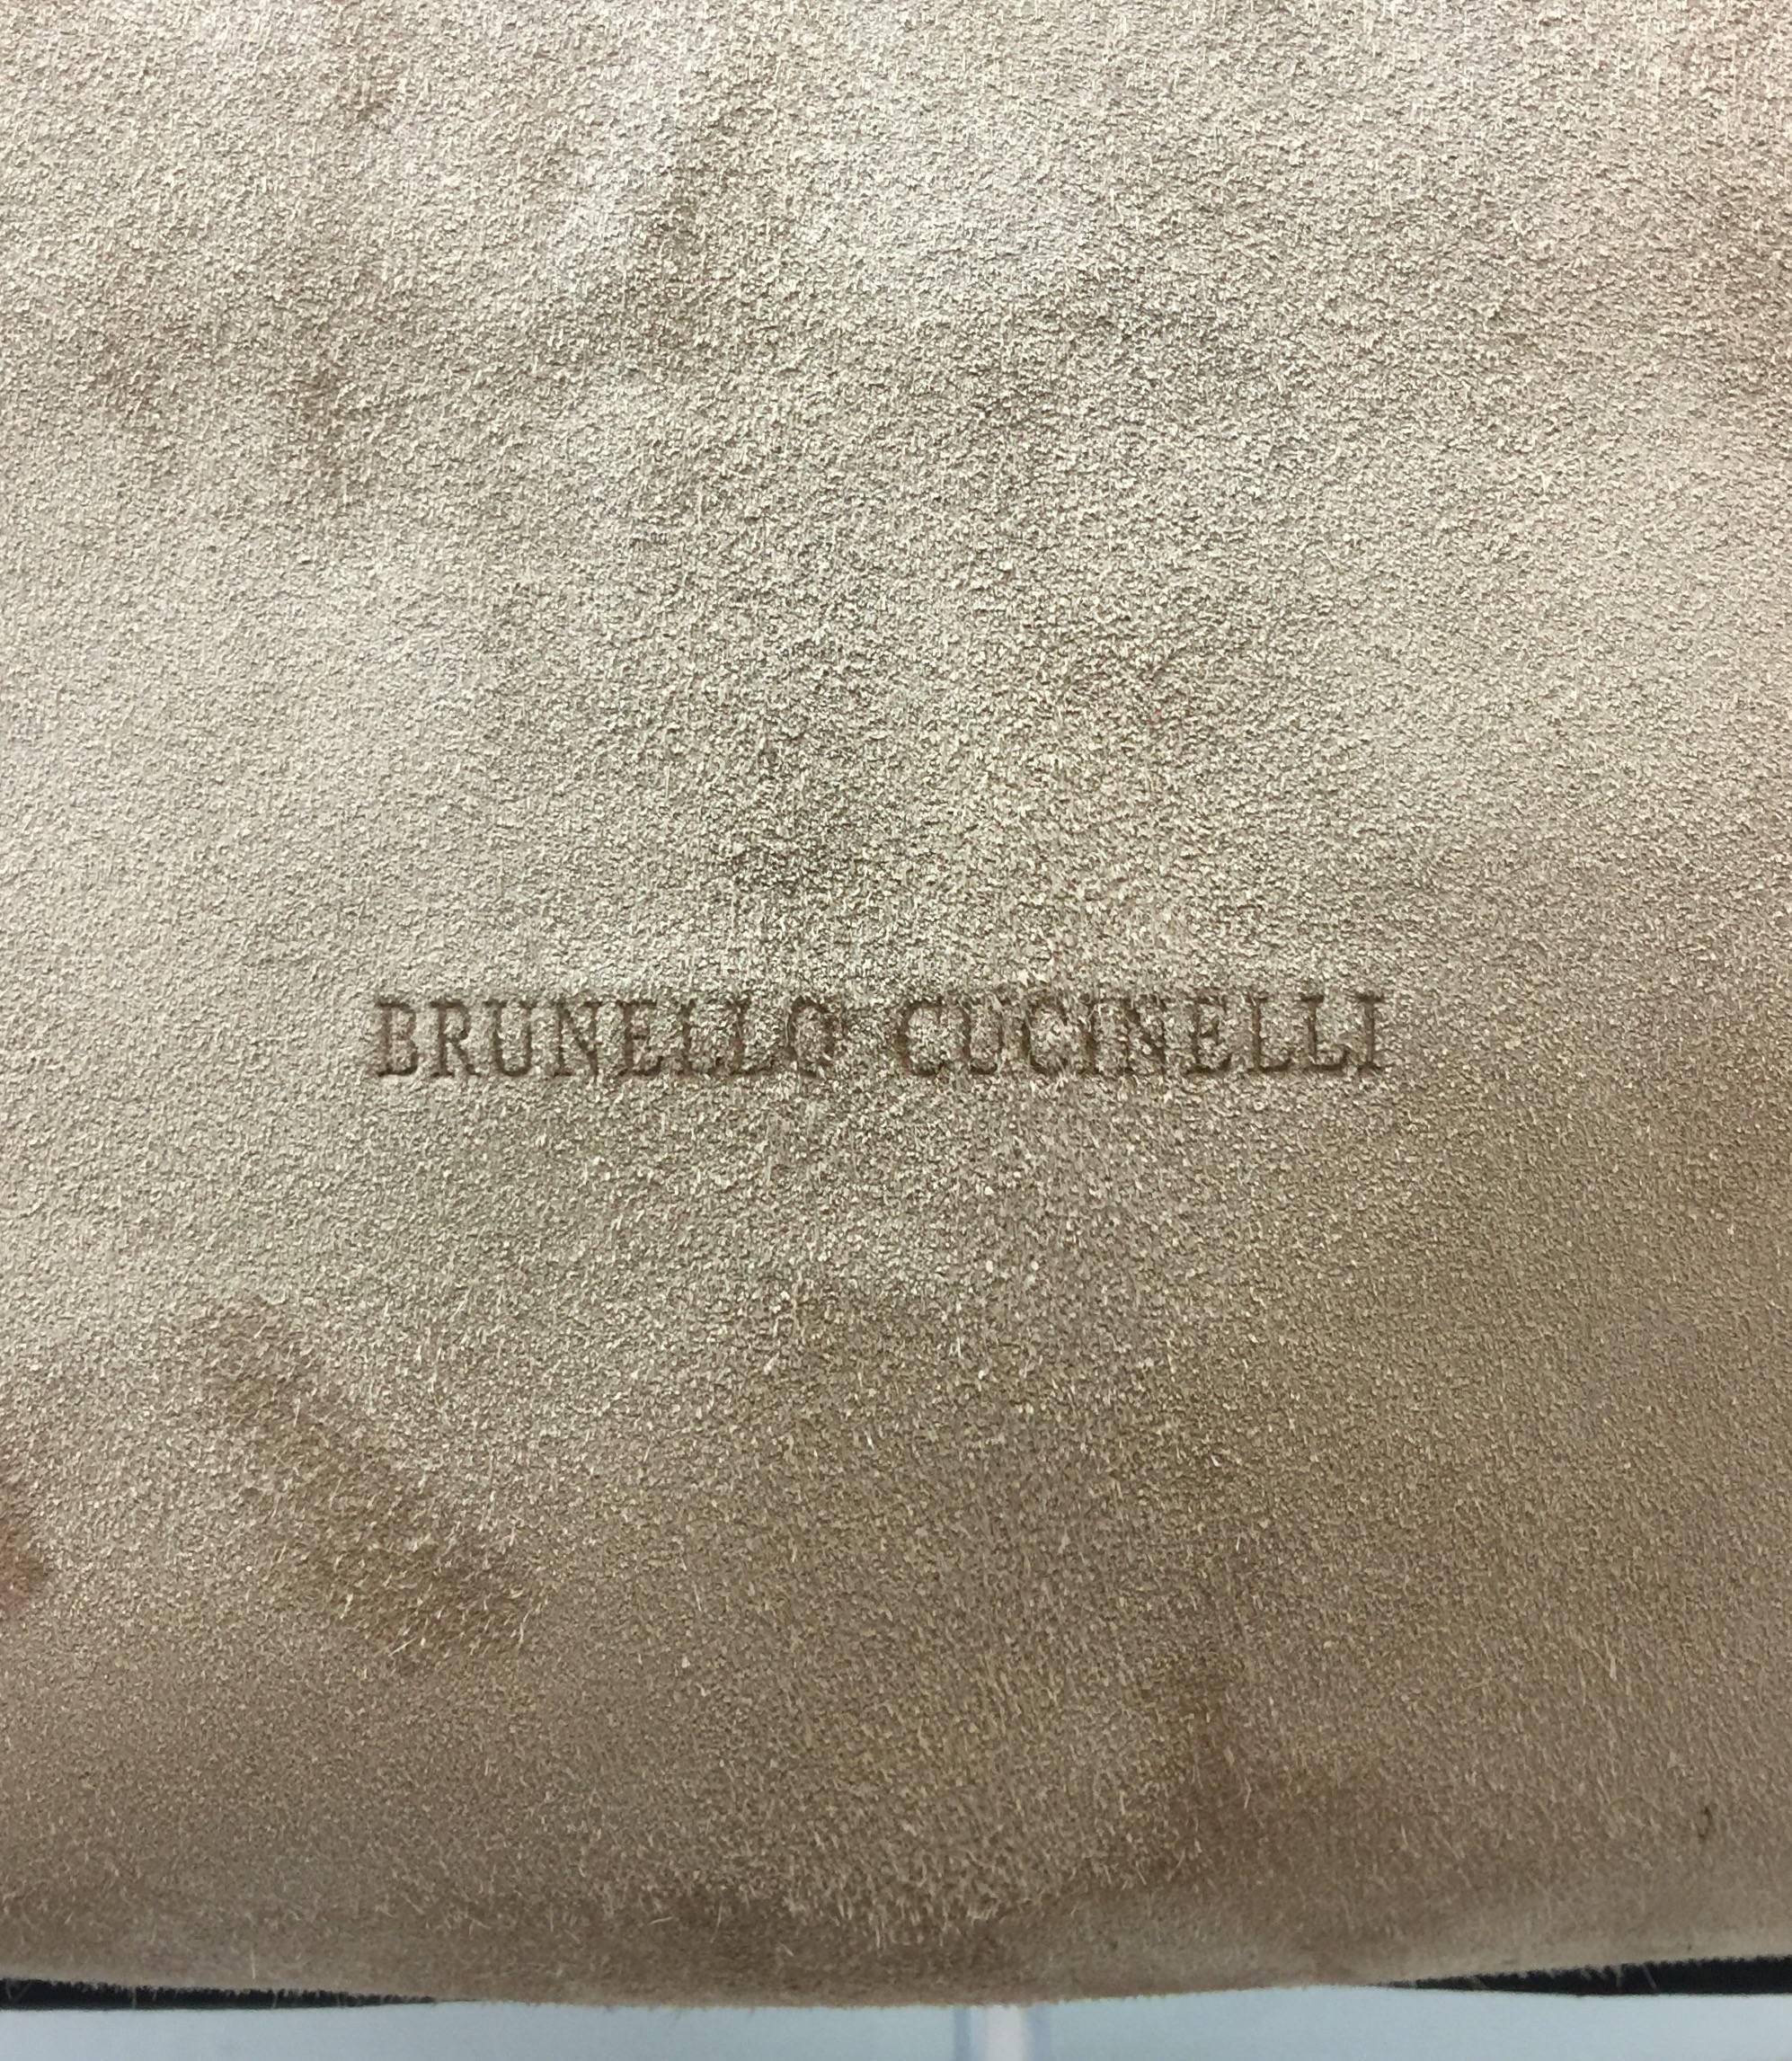 Brunello Cucinelli Suede and Leather Tote 2